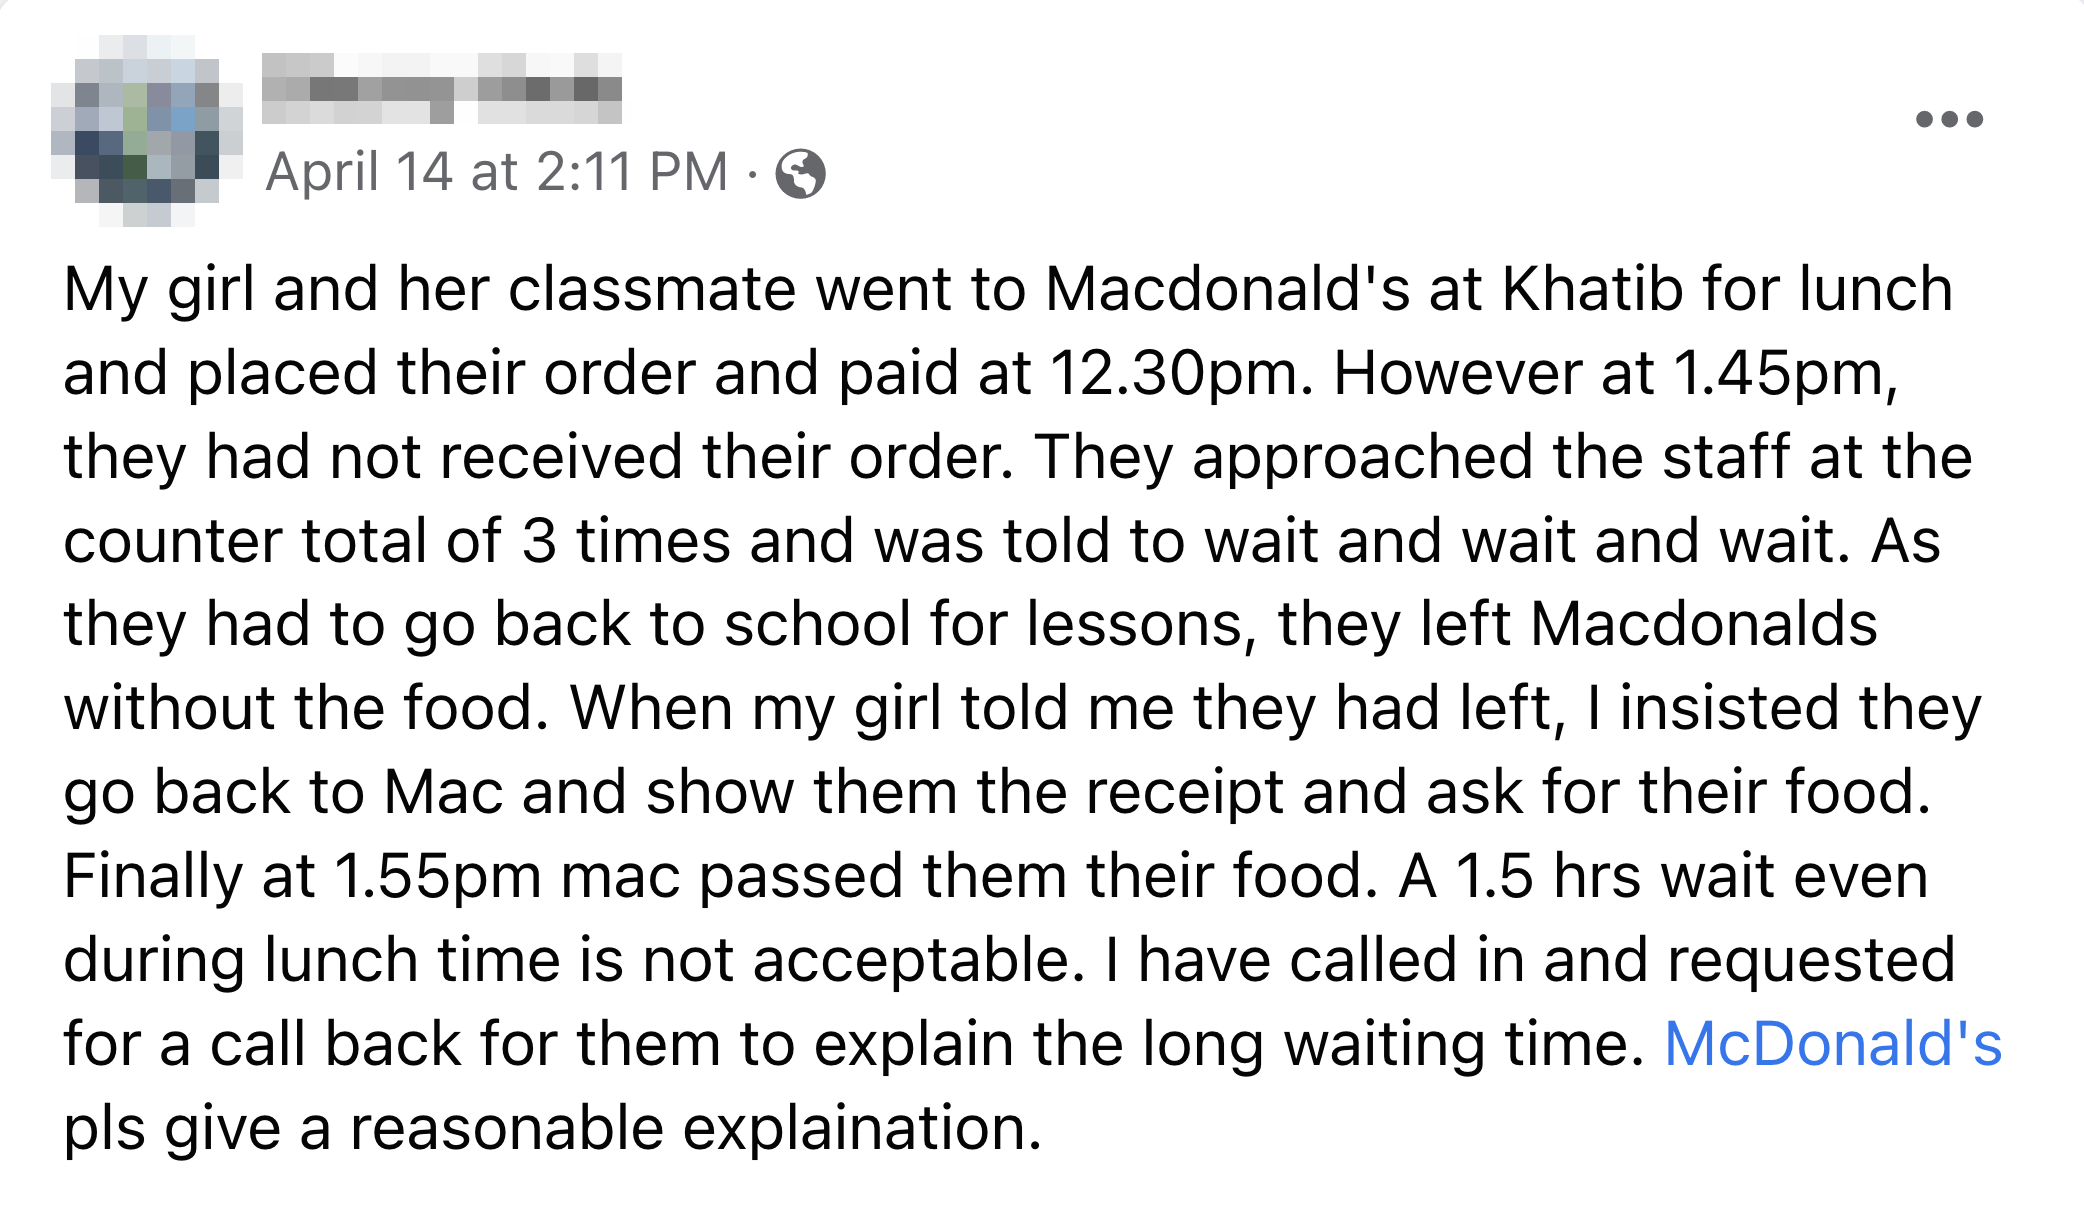 khatib mcdonald's waiting time